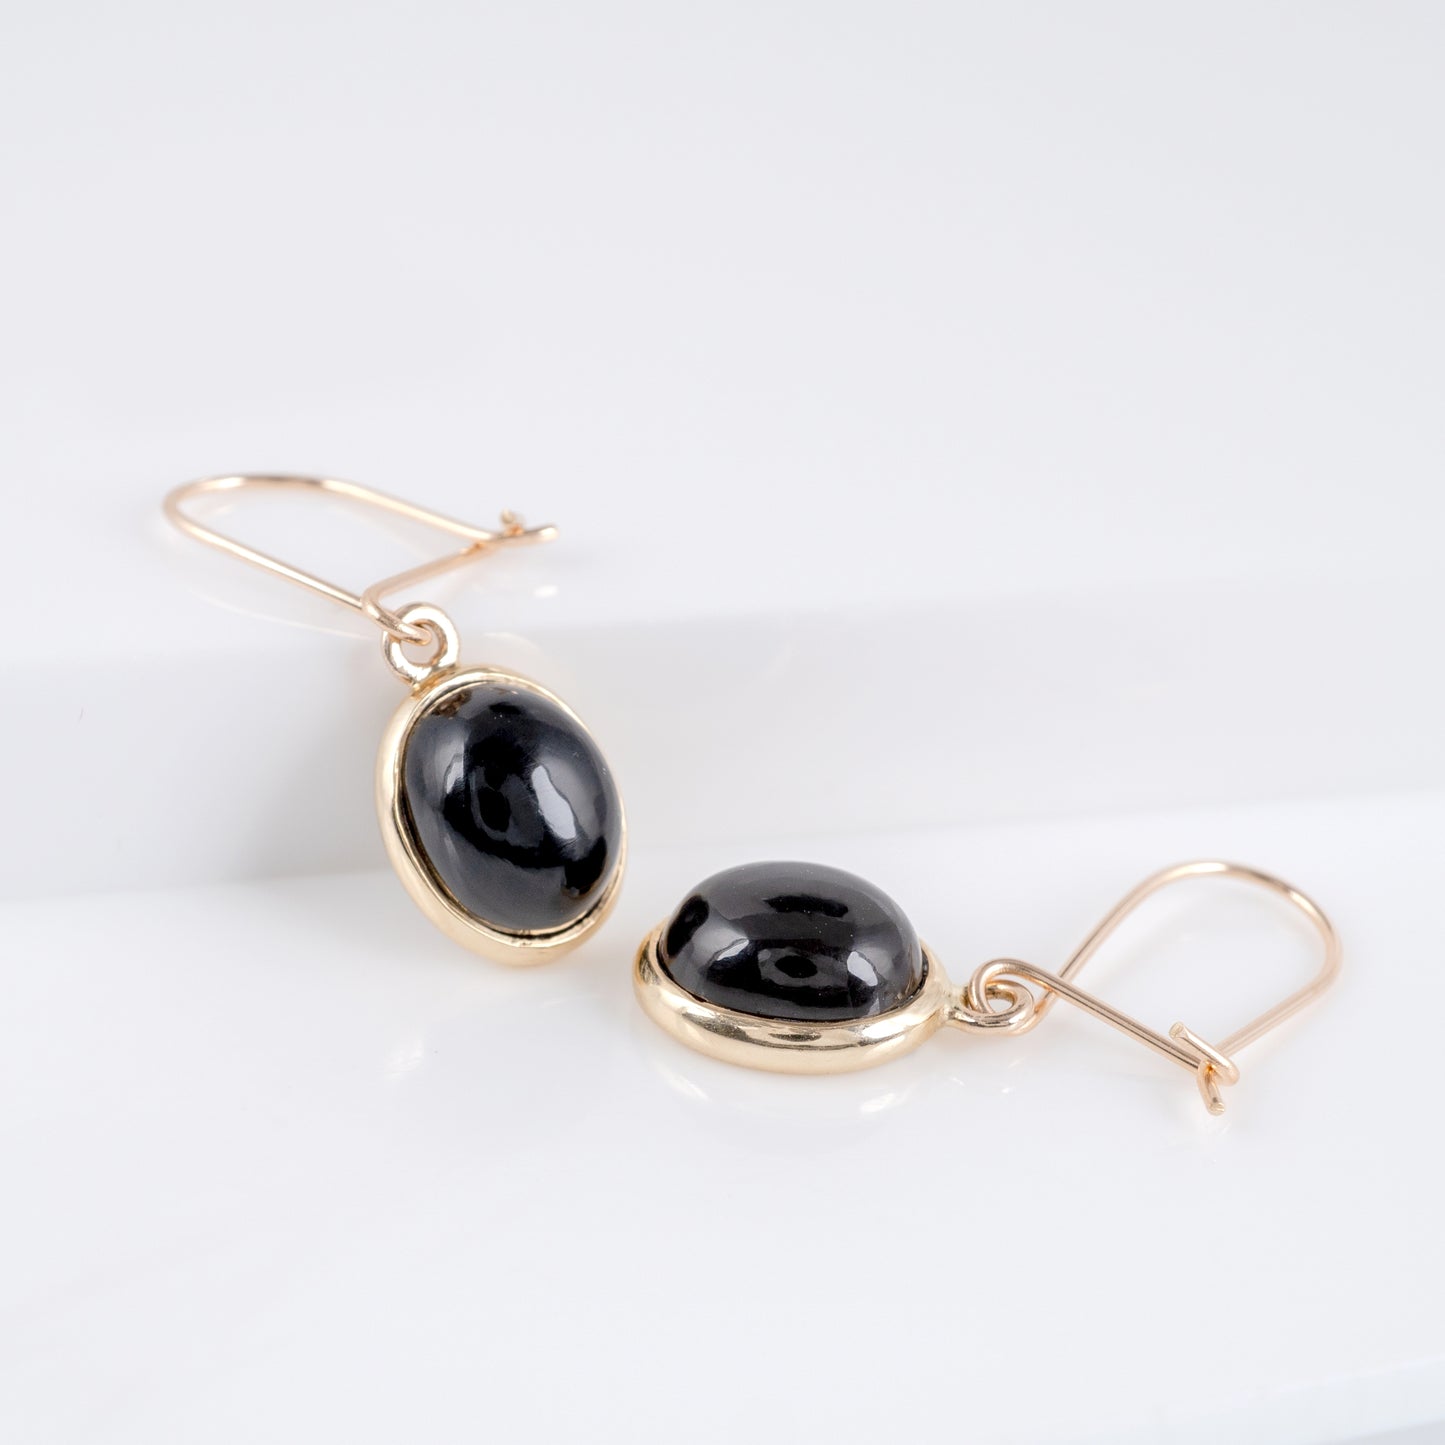 gold hook wire earrings with black gemstone